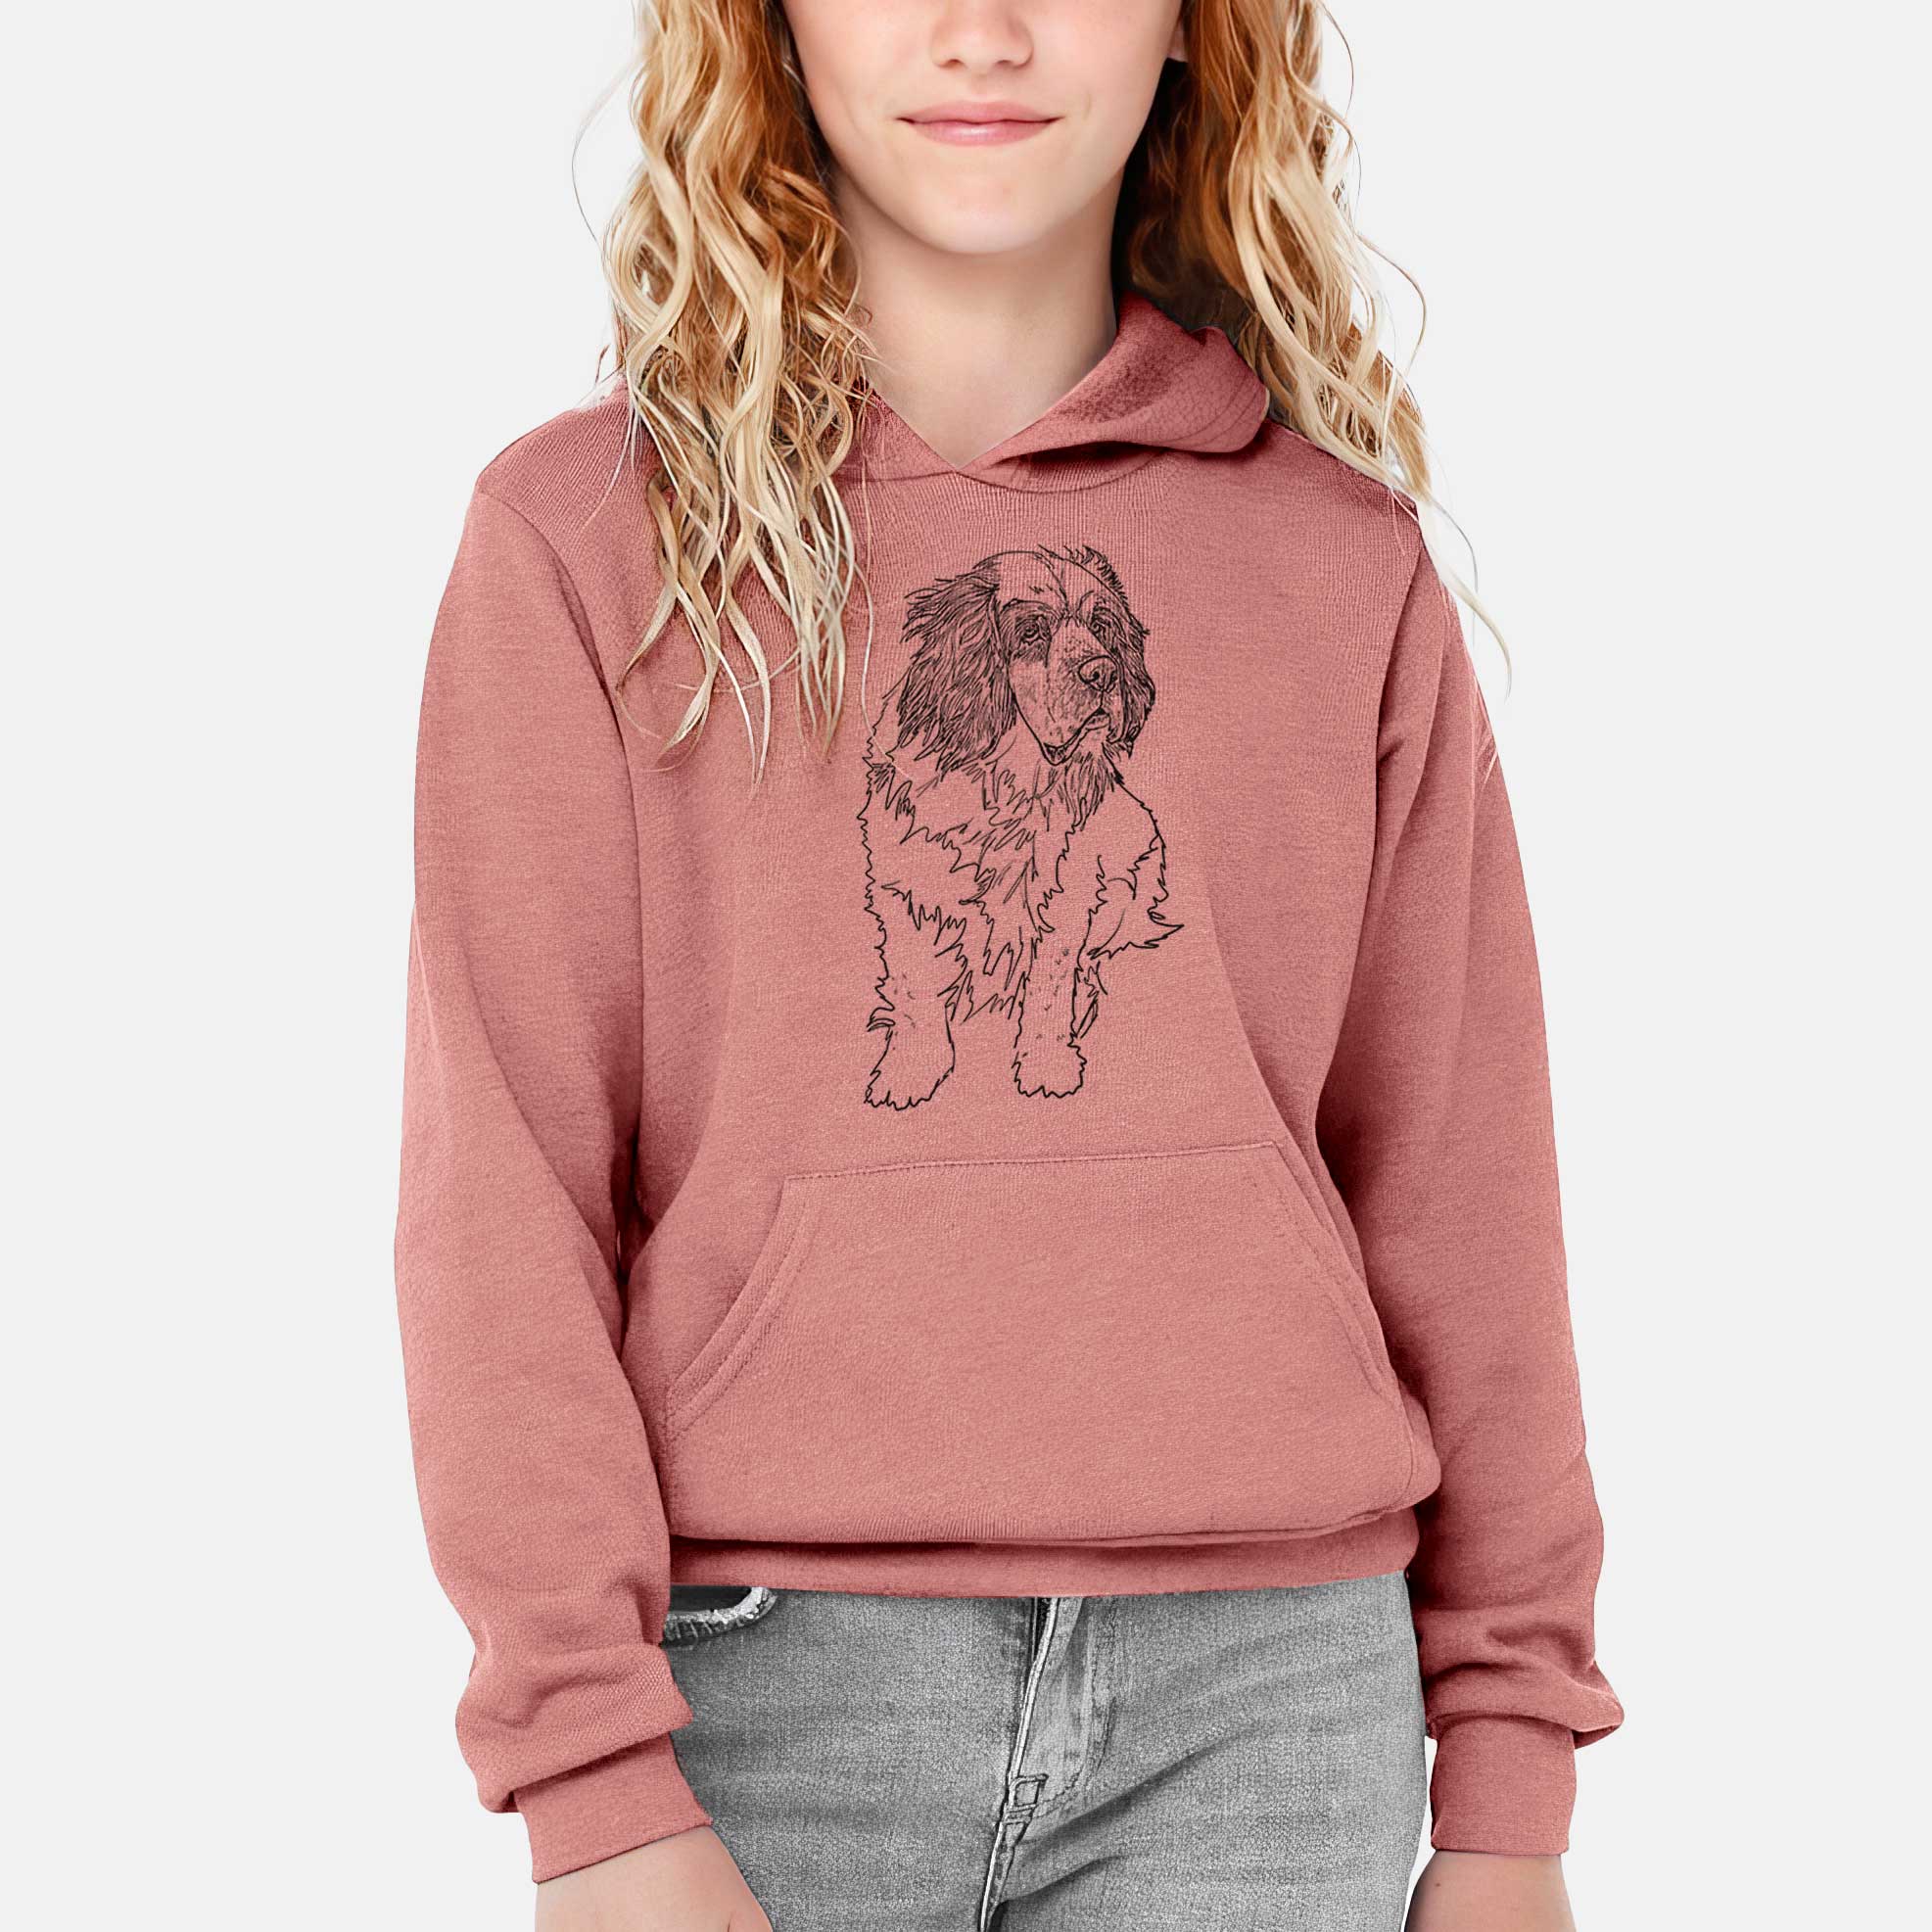 Doodled Nika the Clumber Spaniel - Youth Hoodie Sweatshirt